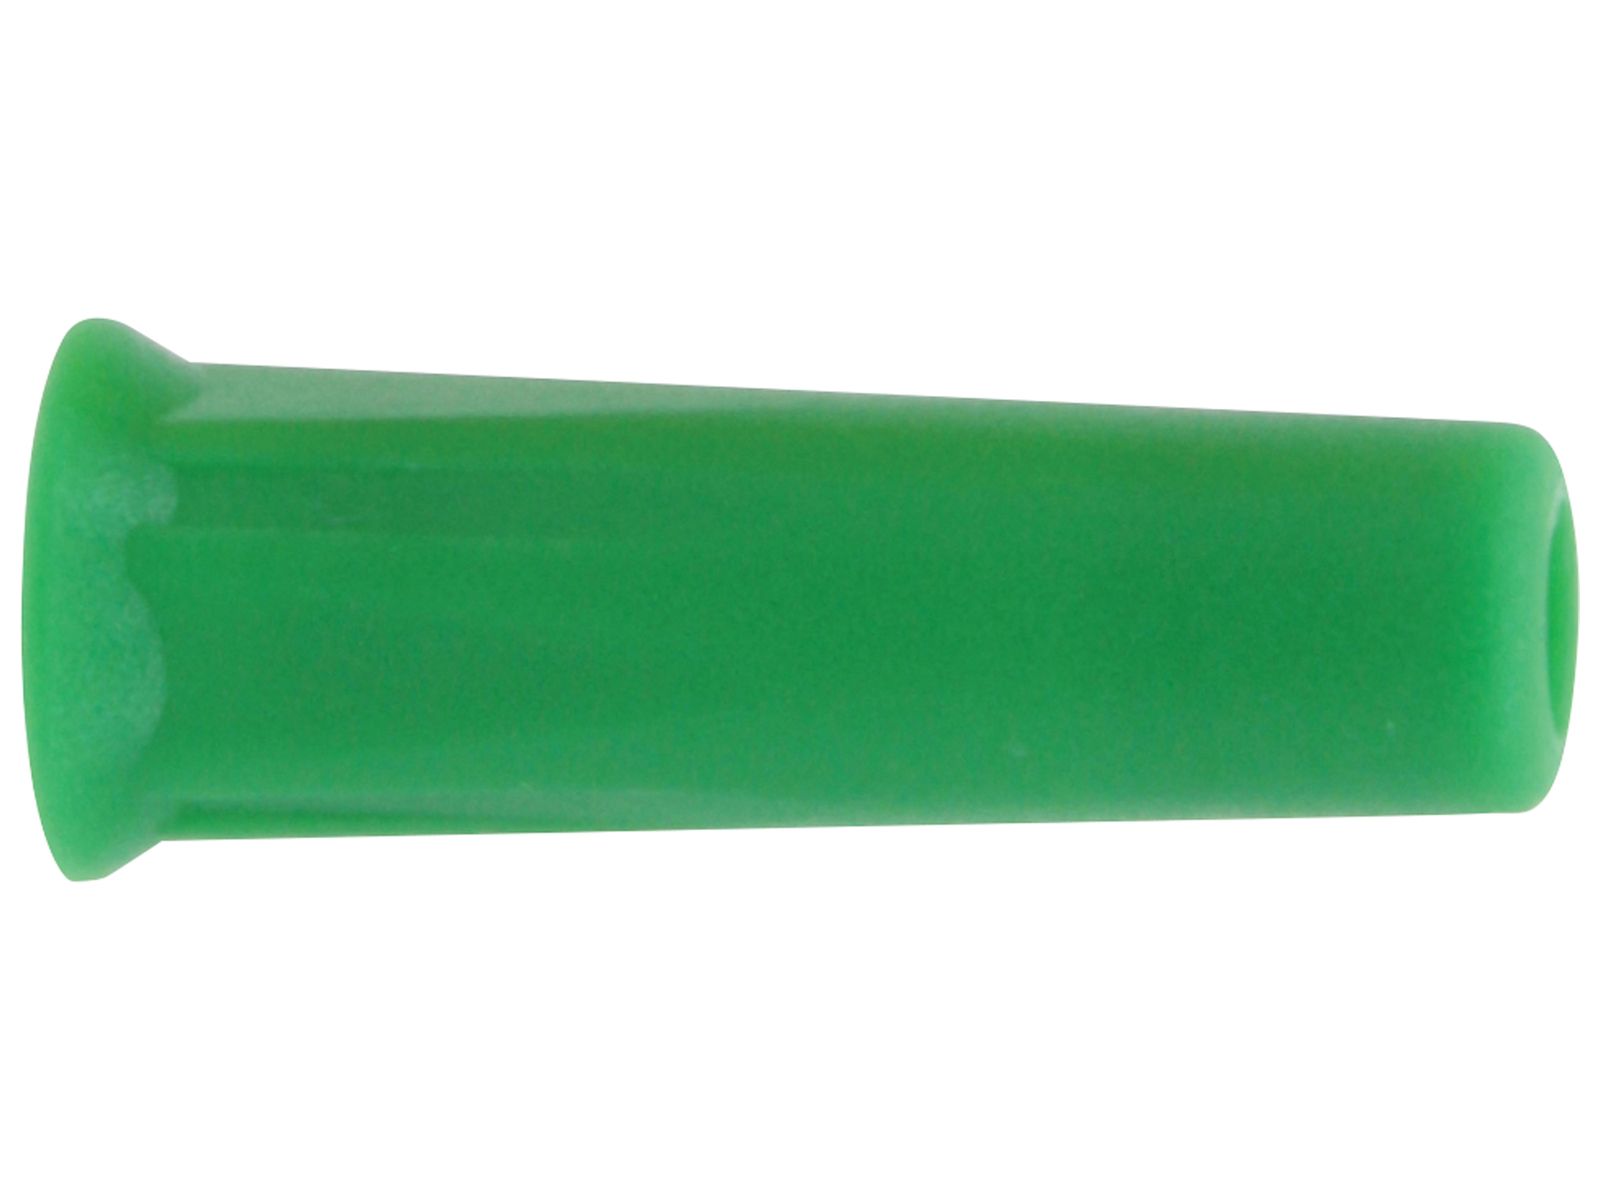 DONAU ELEKTRONIK Bananenkupplung, 4mm, grün, 3014 von Donau Elektronik